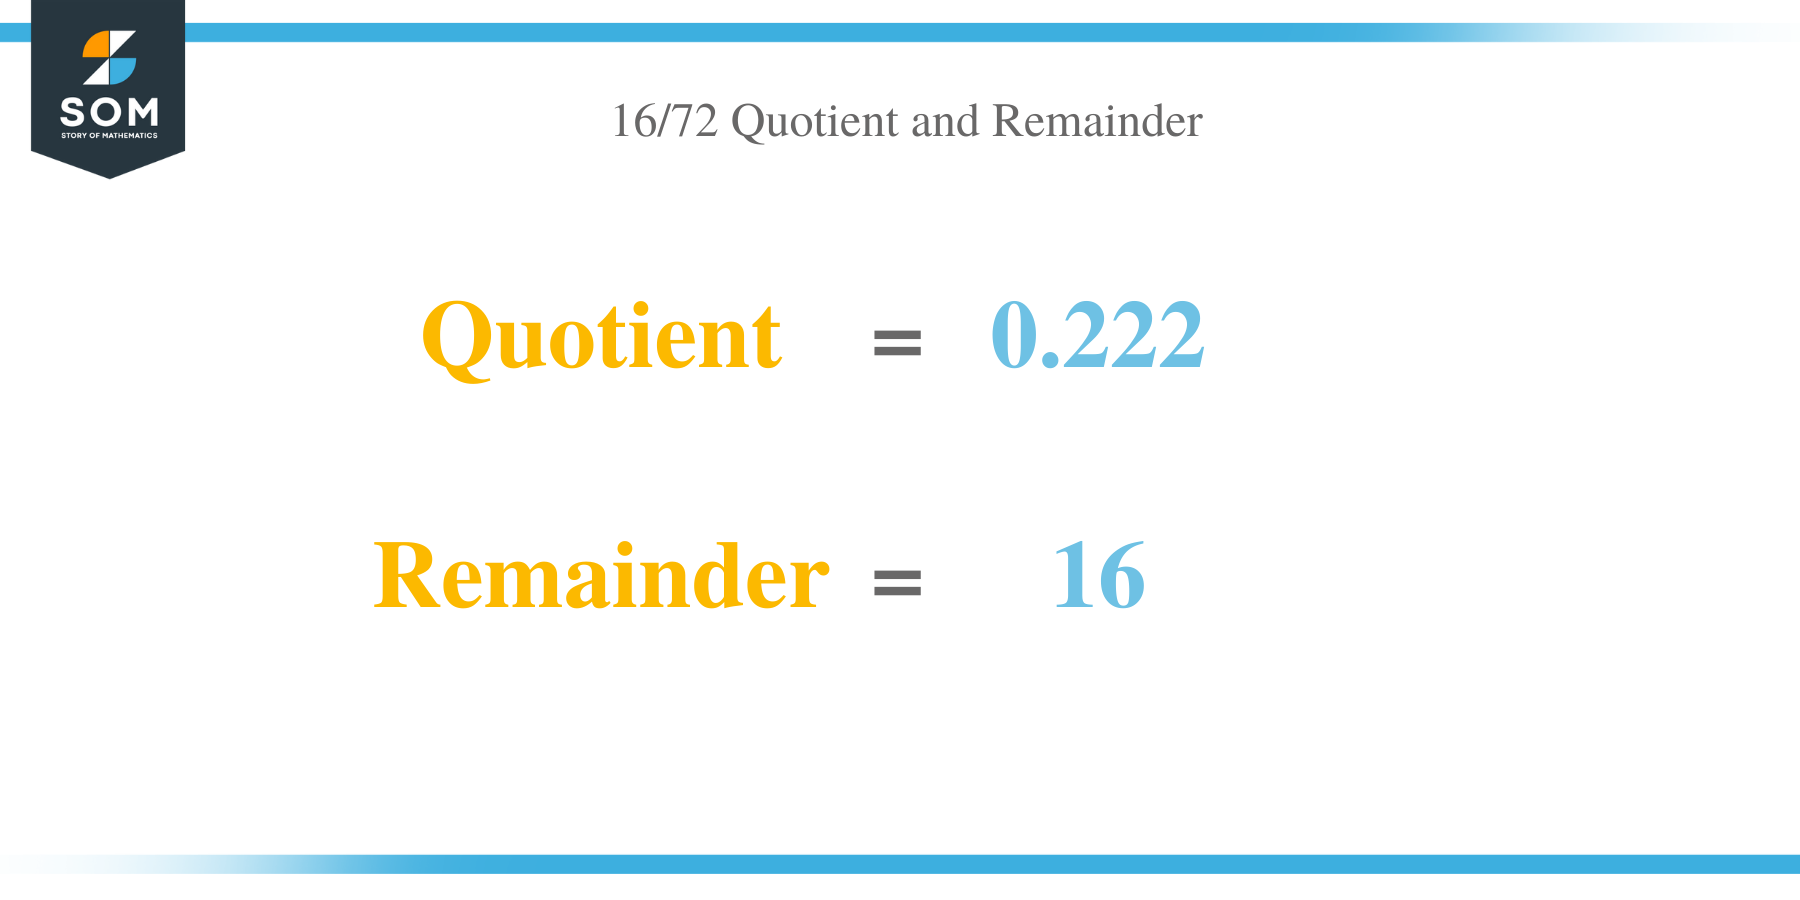 Quotient and Remainder of 16 per 72 1